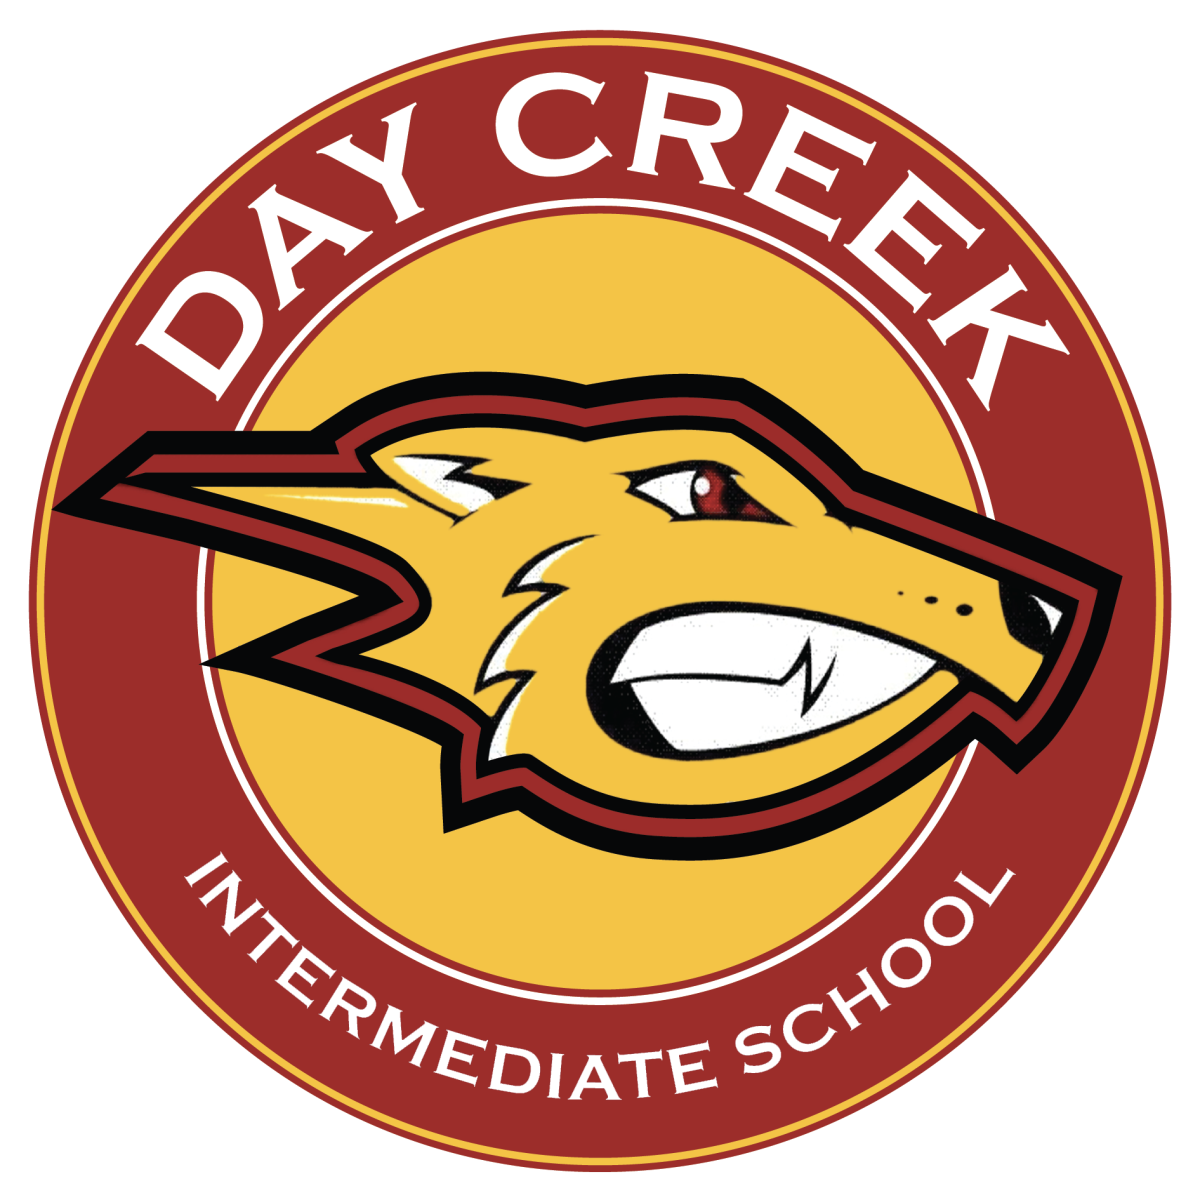 Day+Creek+logo.